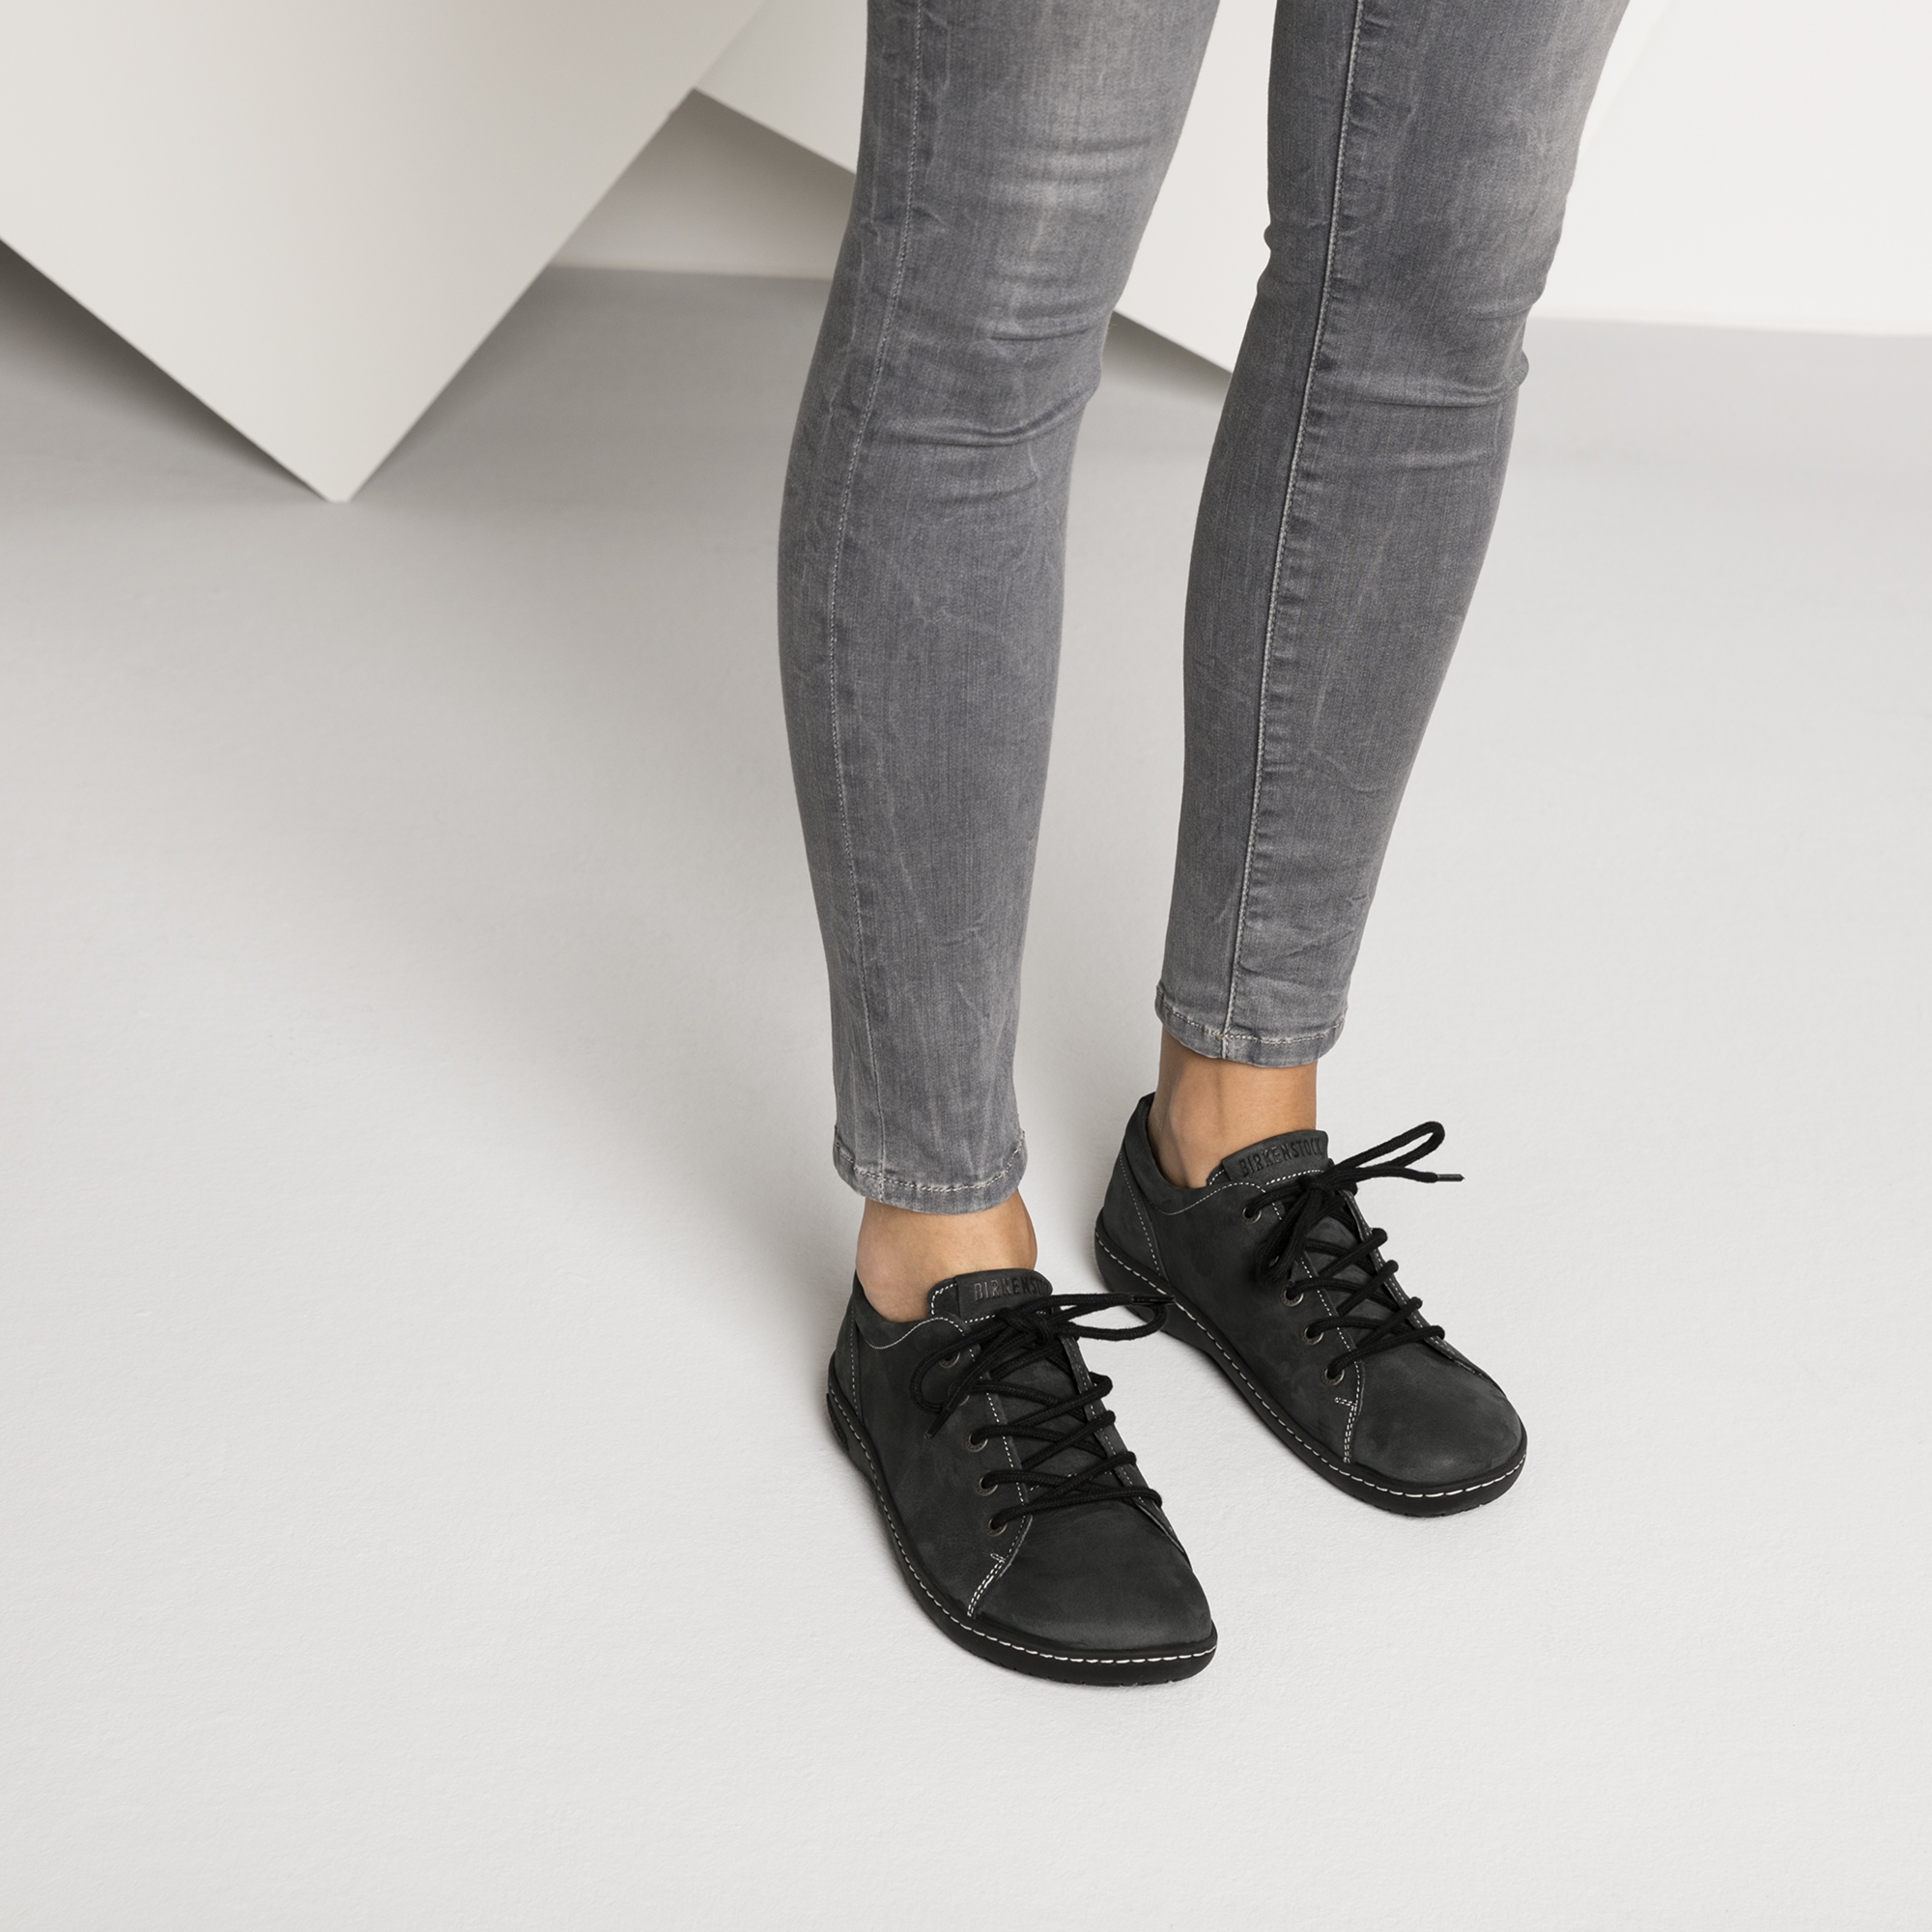 new adidas sandals womens 2019